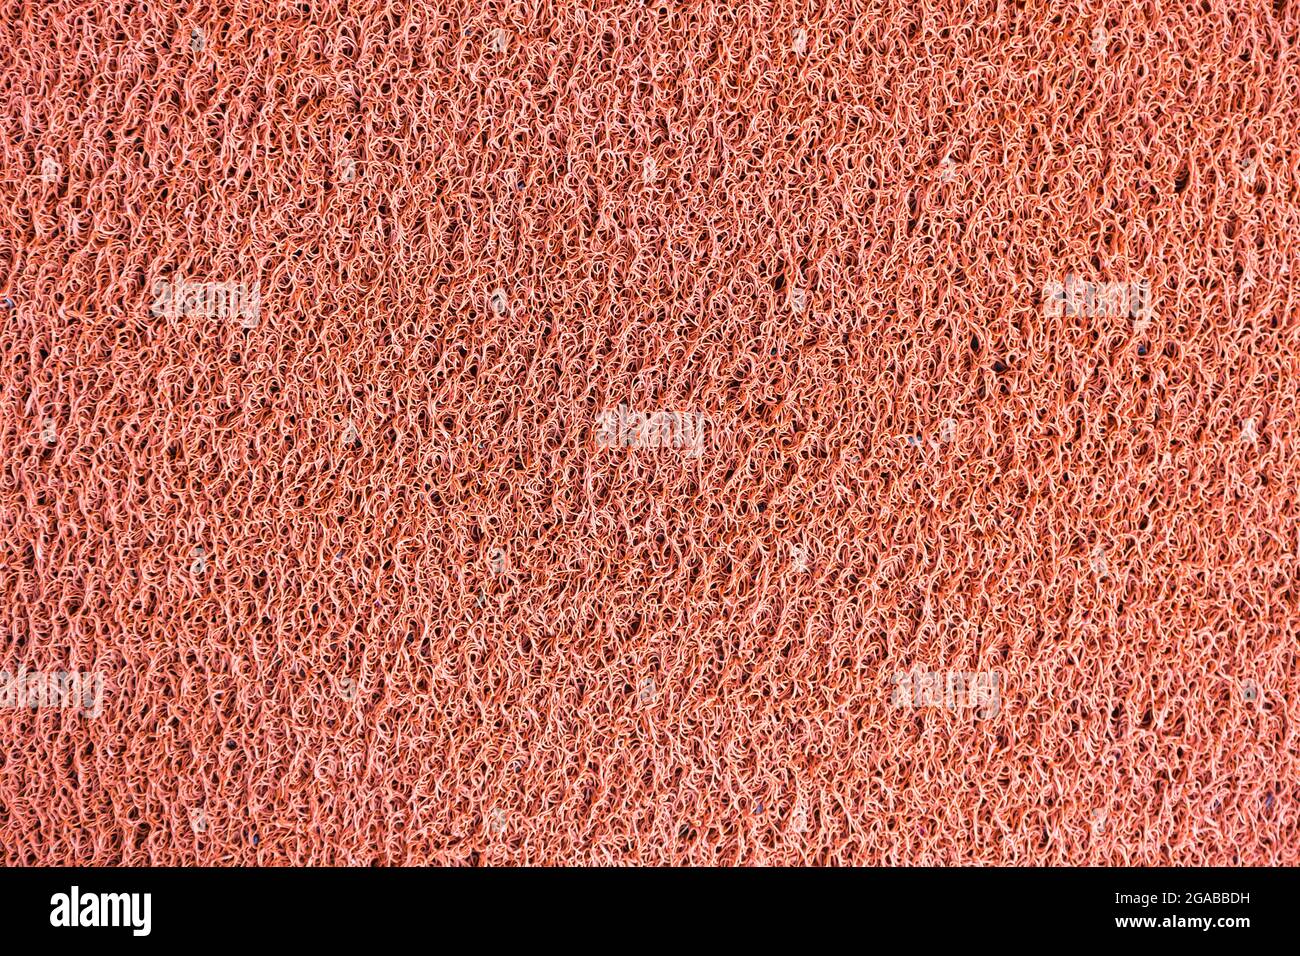 Red vinyl dust trap carpet texture background Stock Photo - Alamy